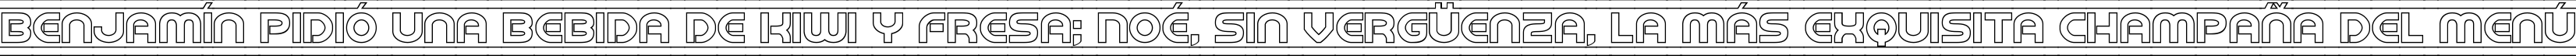 Пример написания шрифтом Barcade Outline текста на испанском